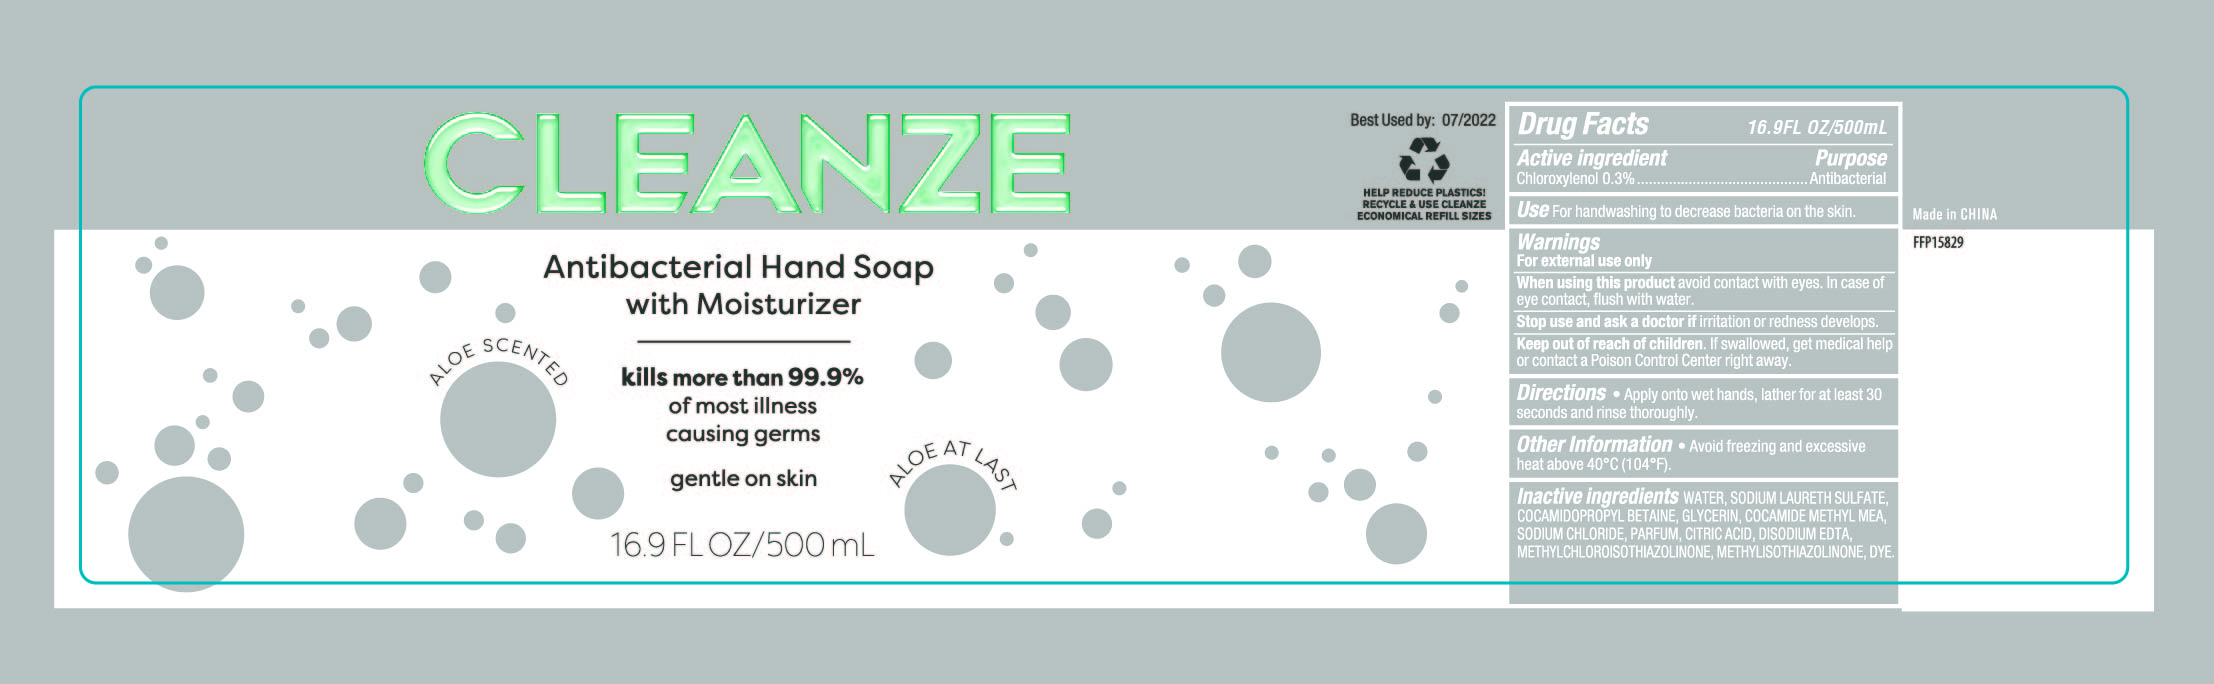 image of Hand Sanitizer 4